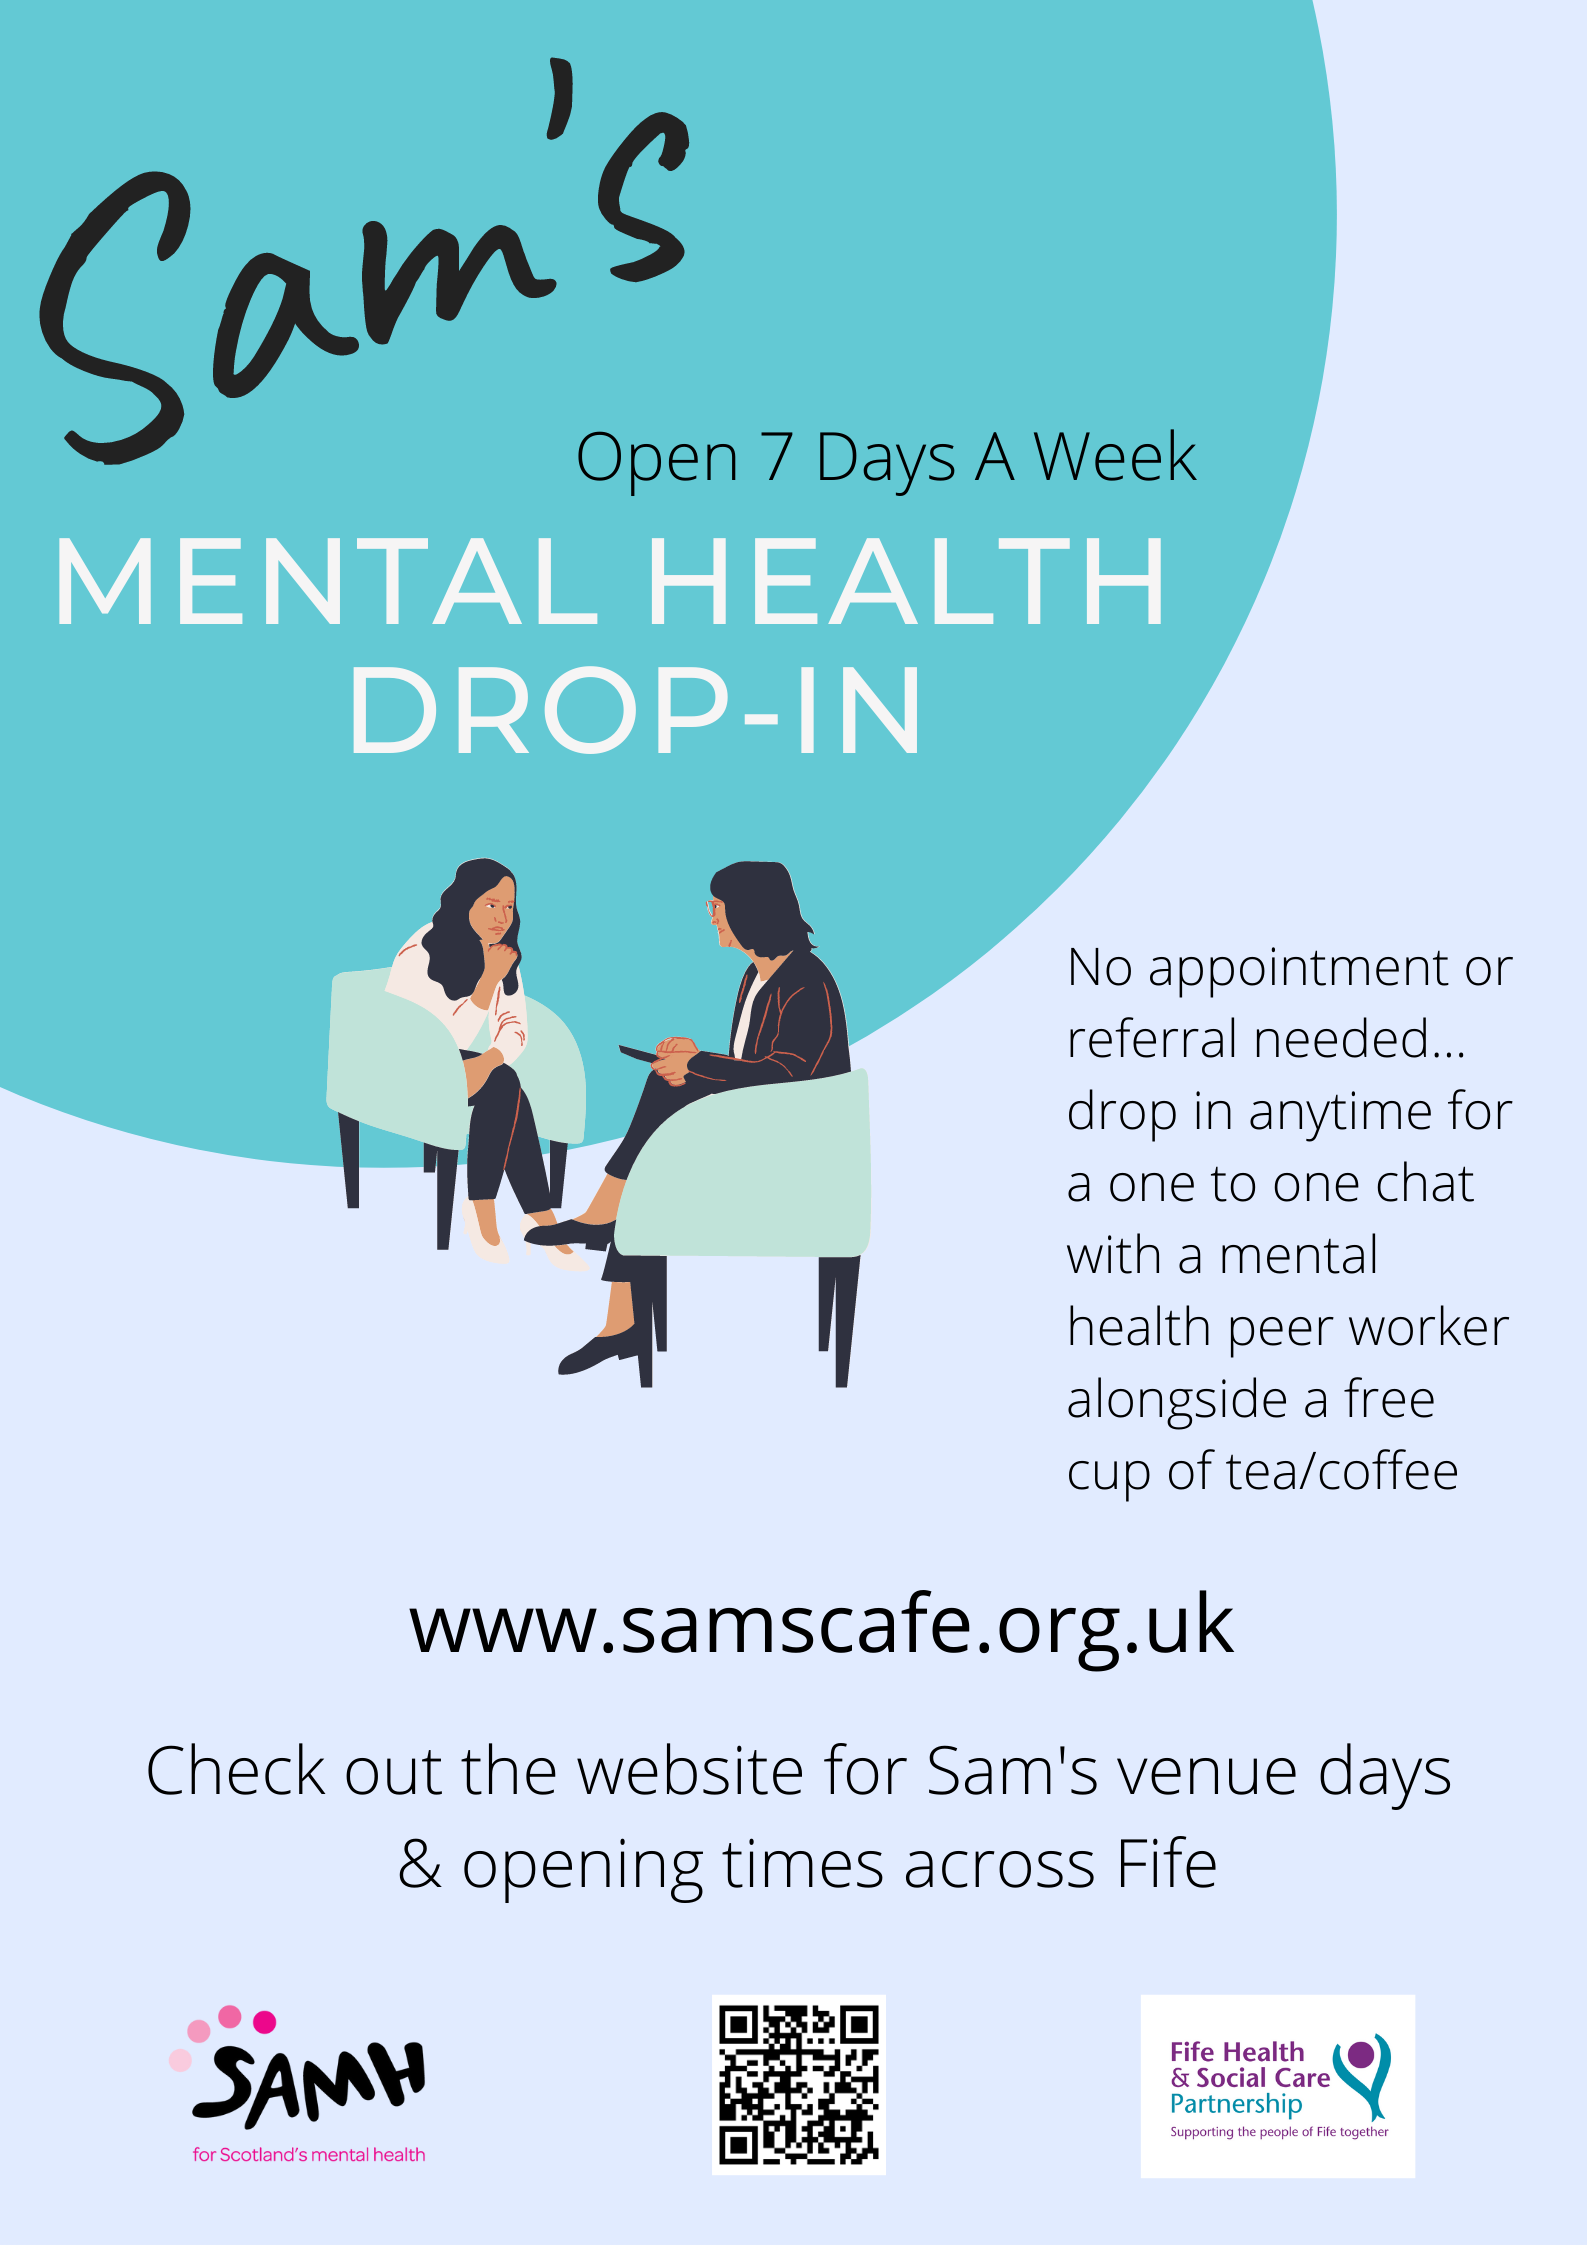 Sam's Mental Health Drop In Full text below